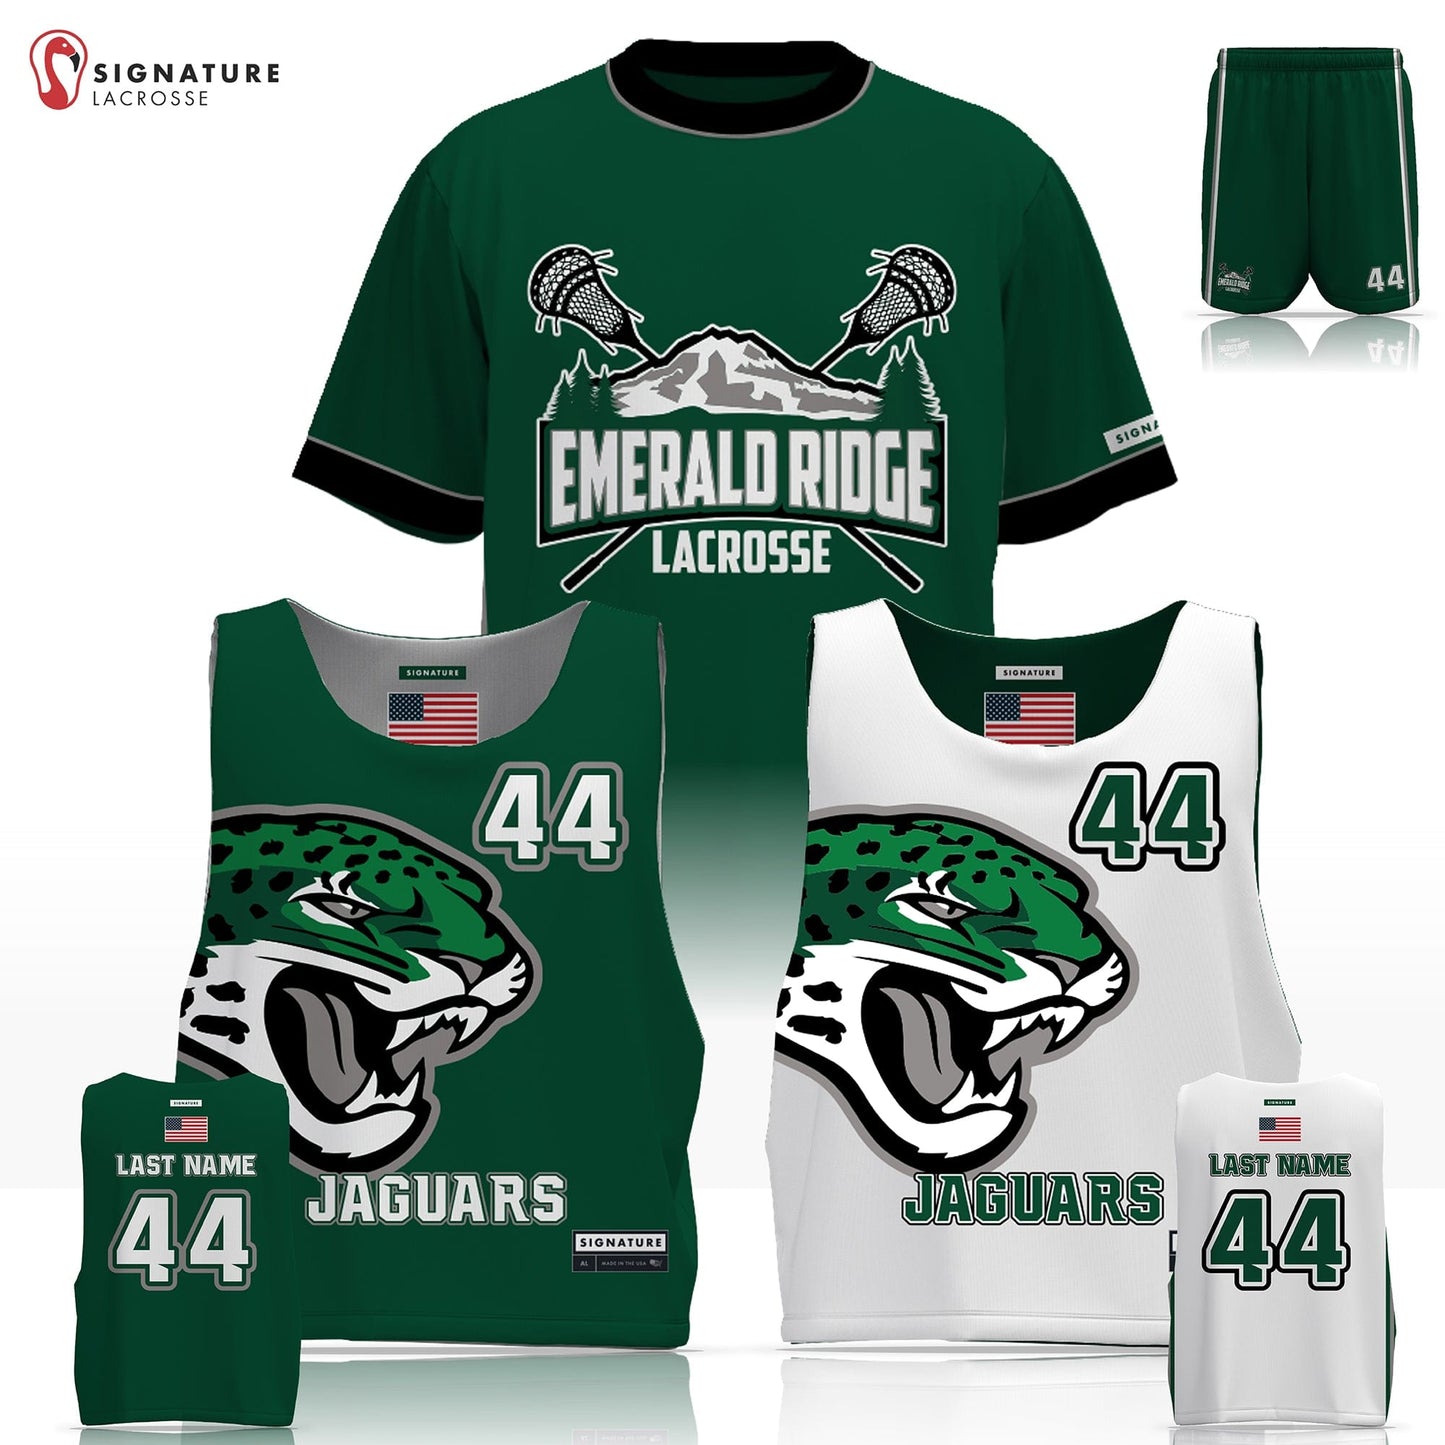 Emerald Ridge Lacrosse Men’s 3 Piece Game Package: Grade 5-6 Signature Lacrosse